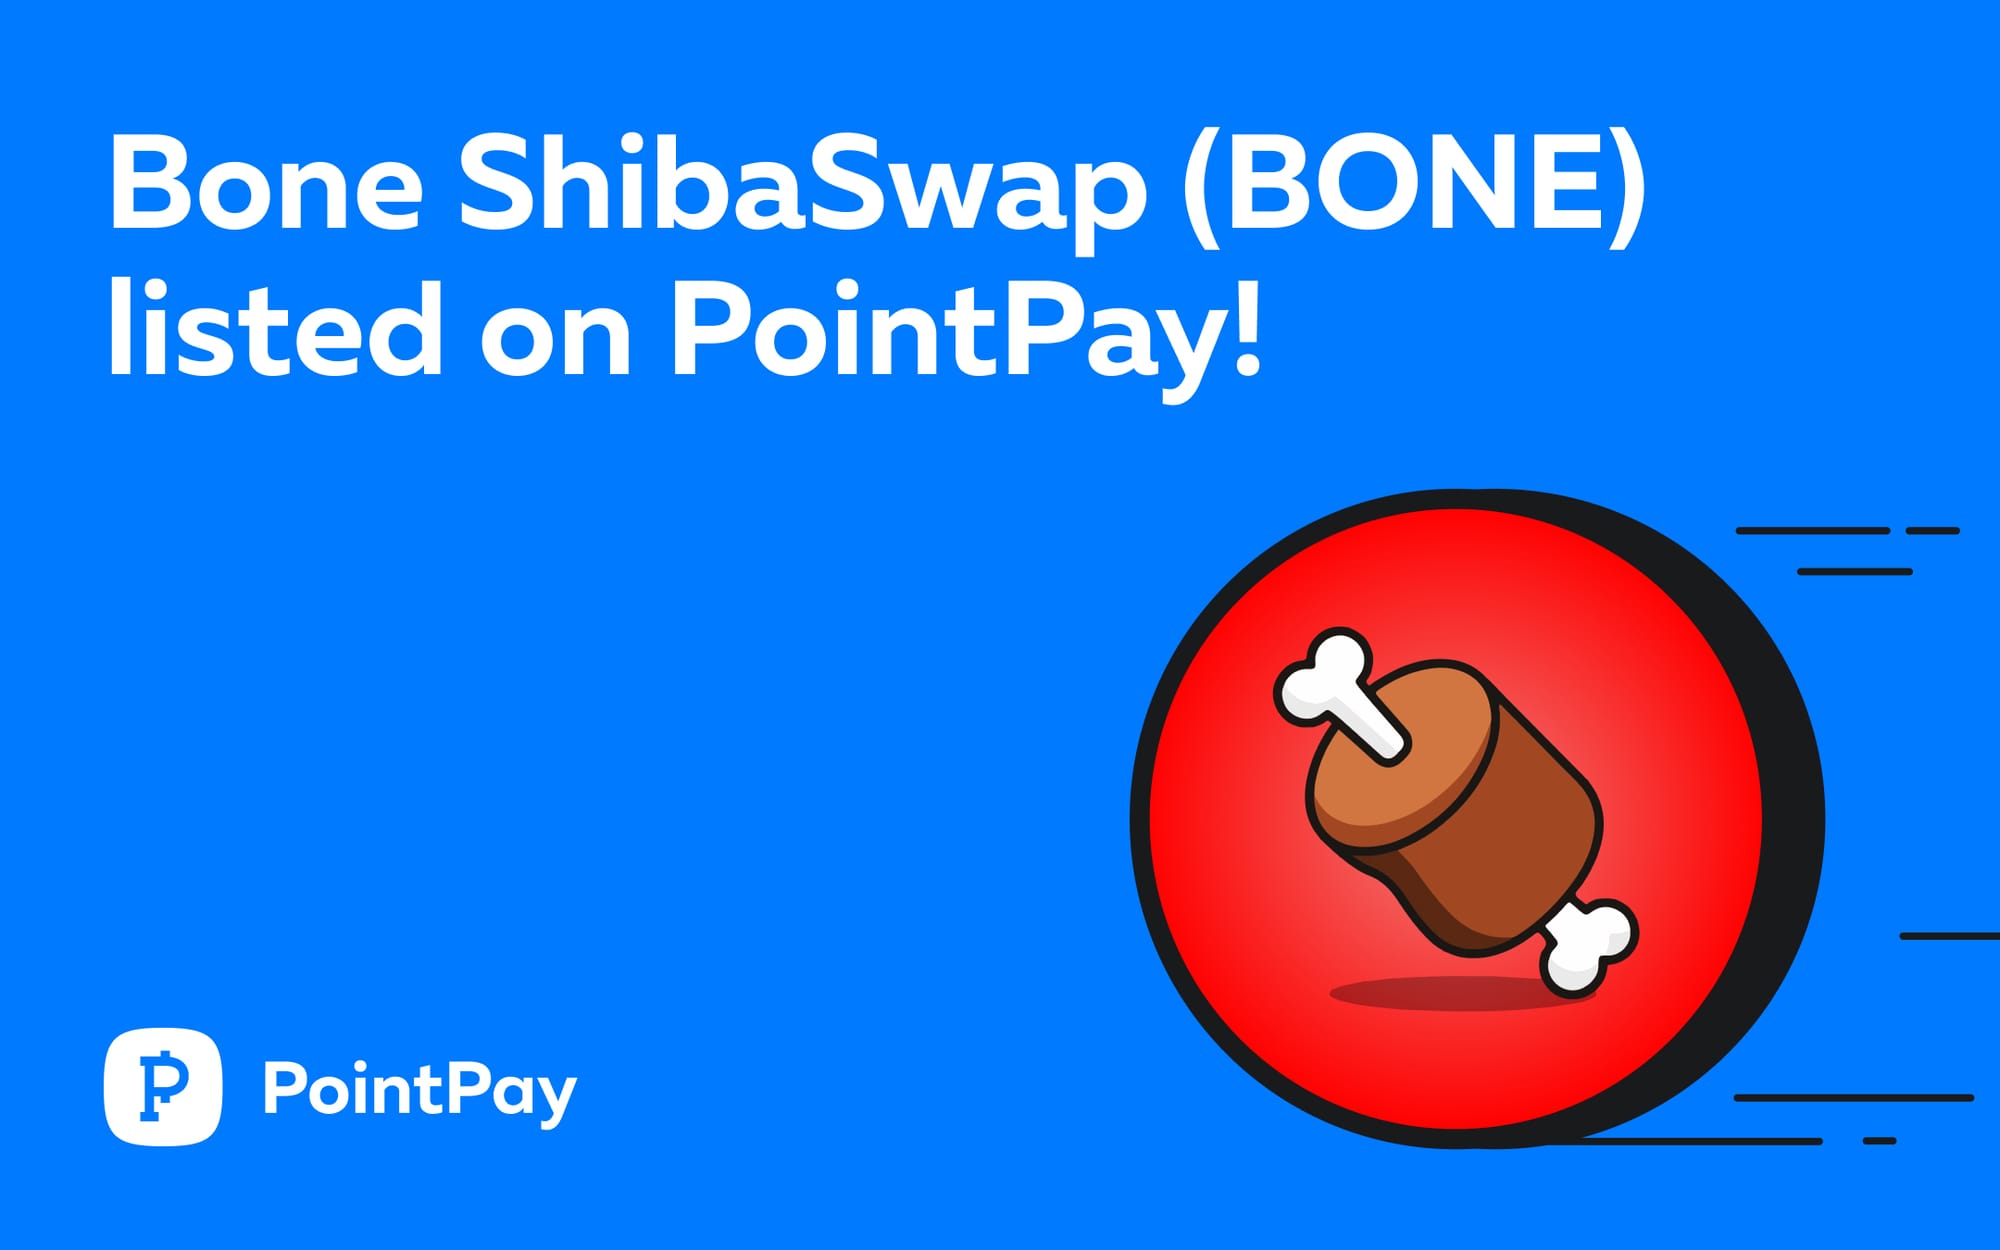 BONE token already available at PointPay platform!